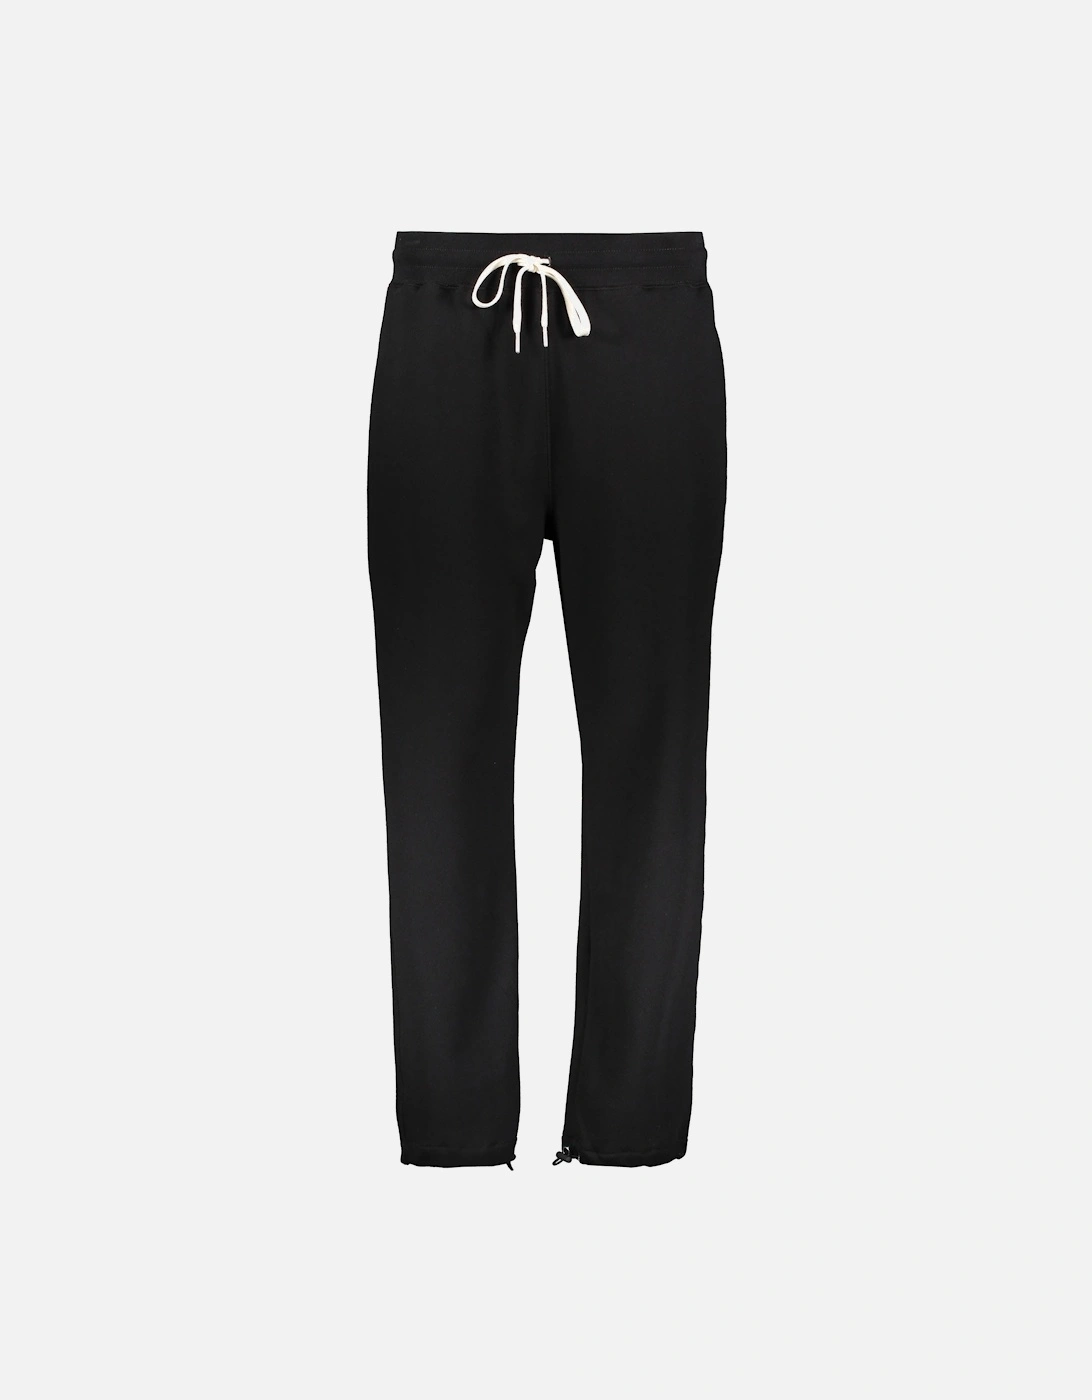 Sydney Sweatpants - Black, 7 of 6